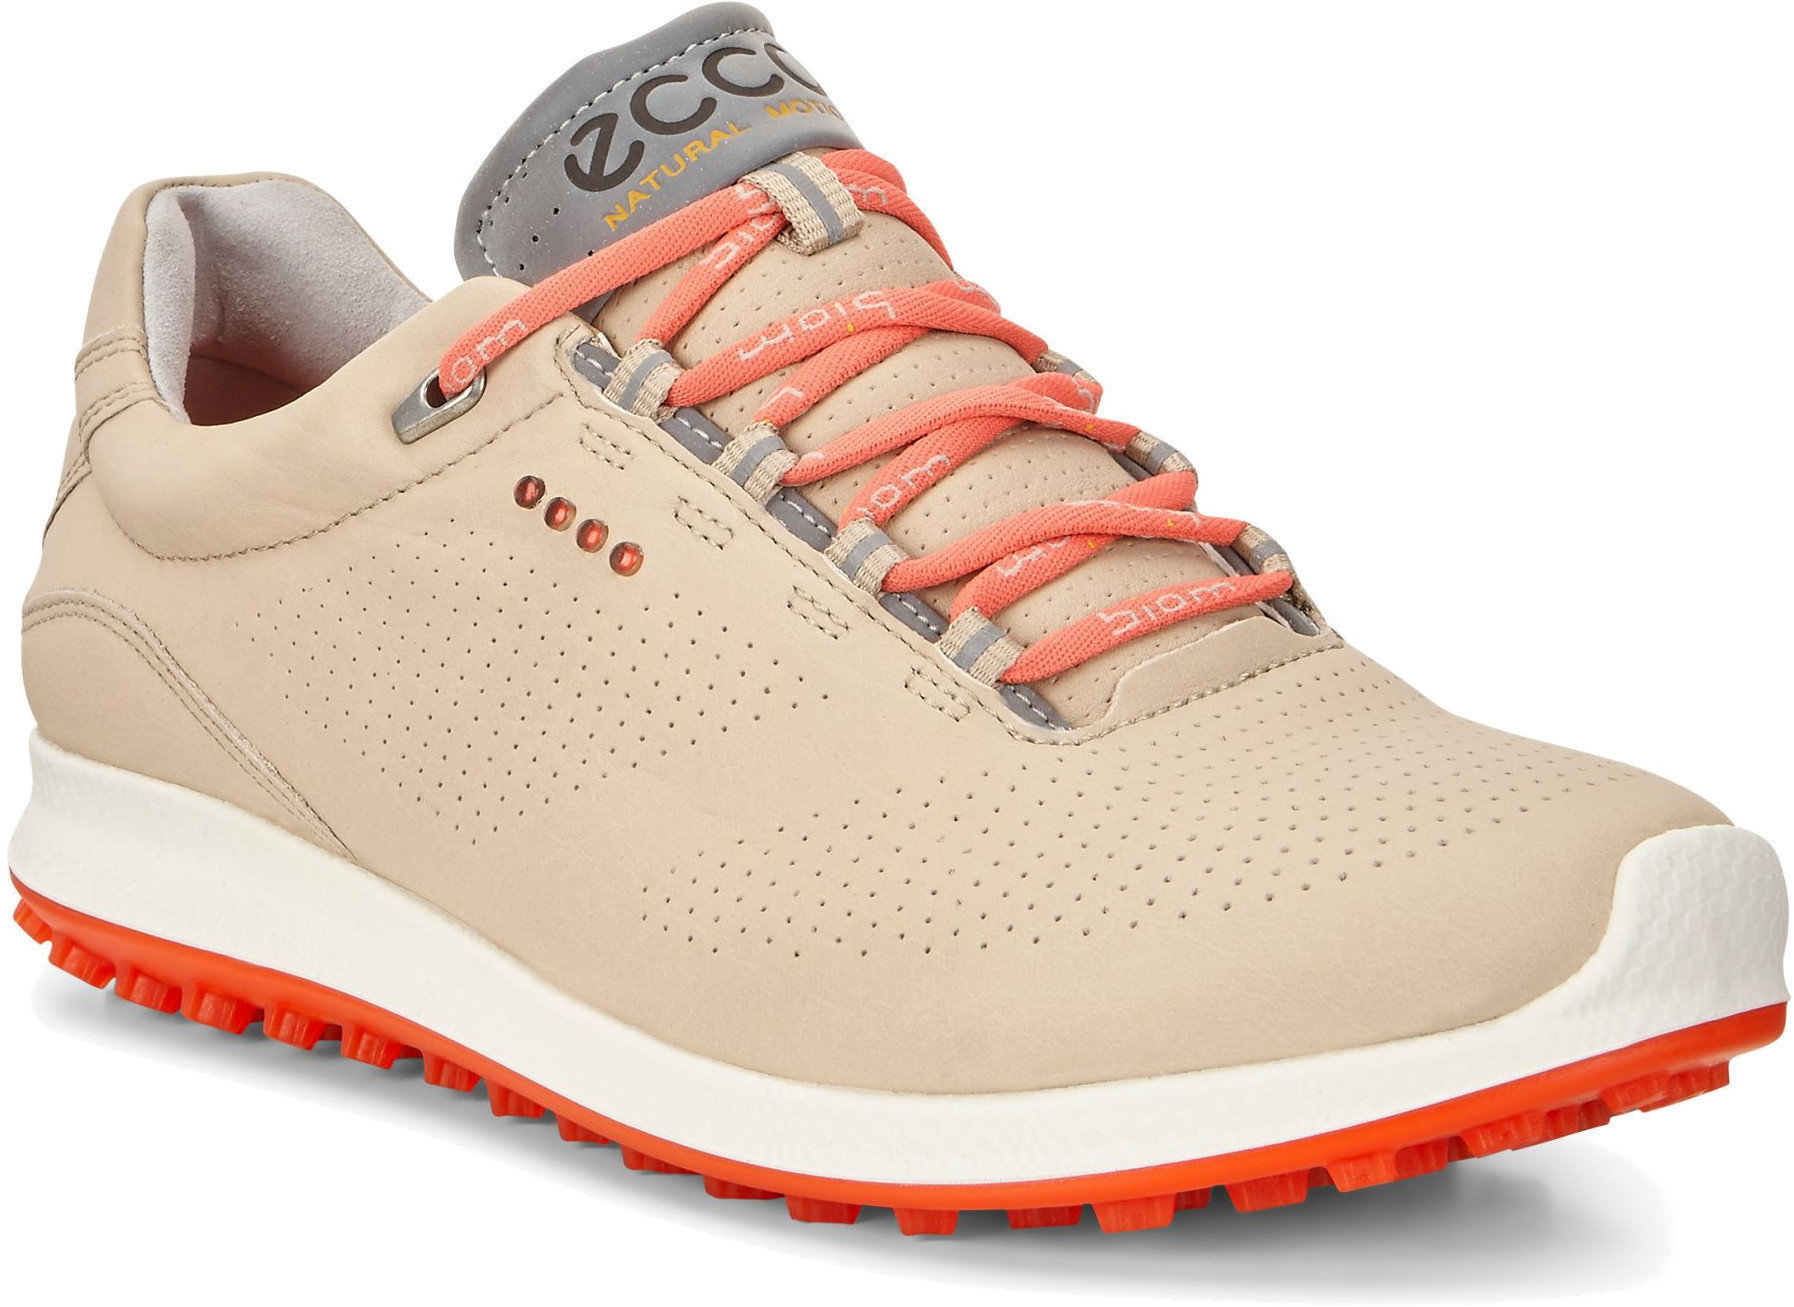 Women's golf shoes Ecco Biom Hybrid 2 Womens Golf Shoes Oyester/Coral Blush US 9